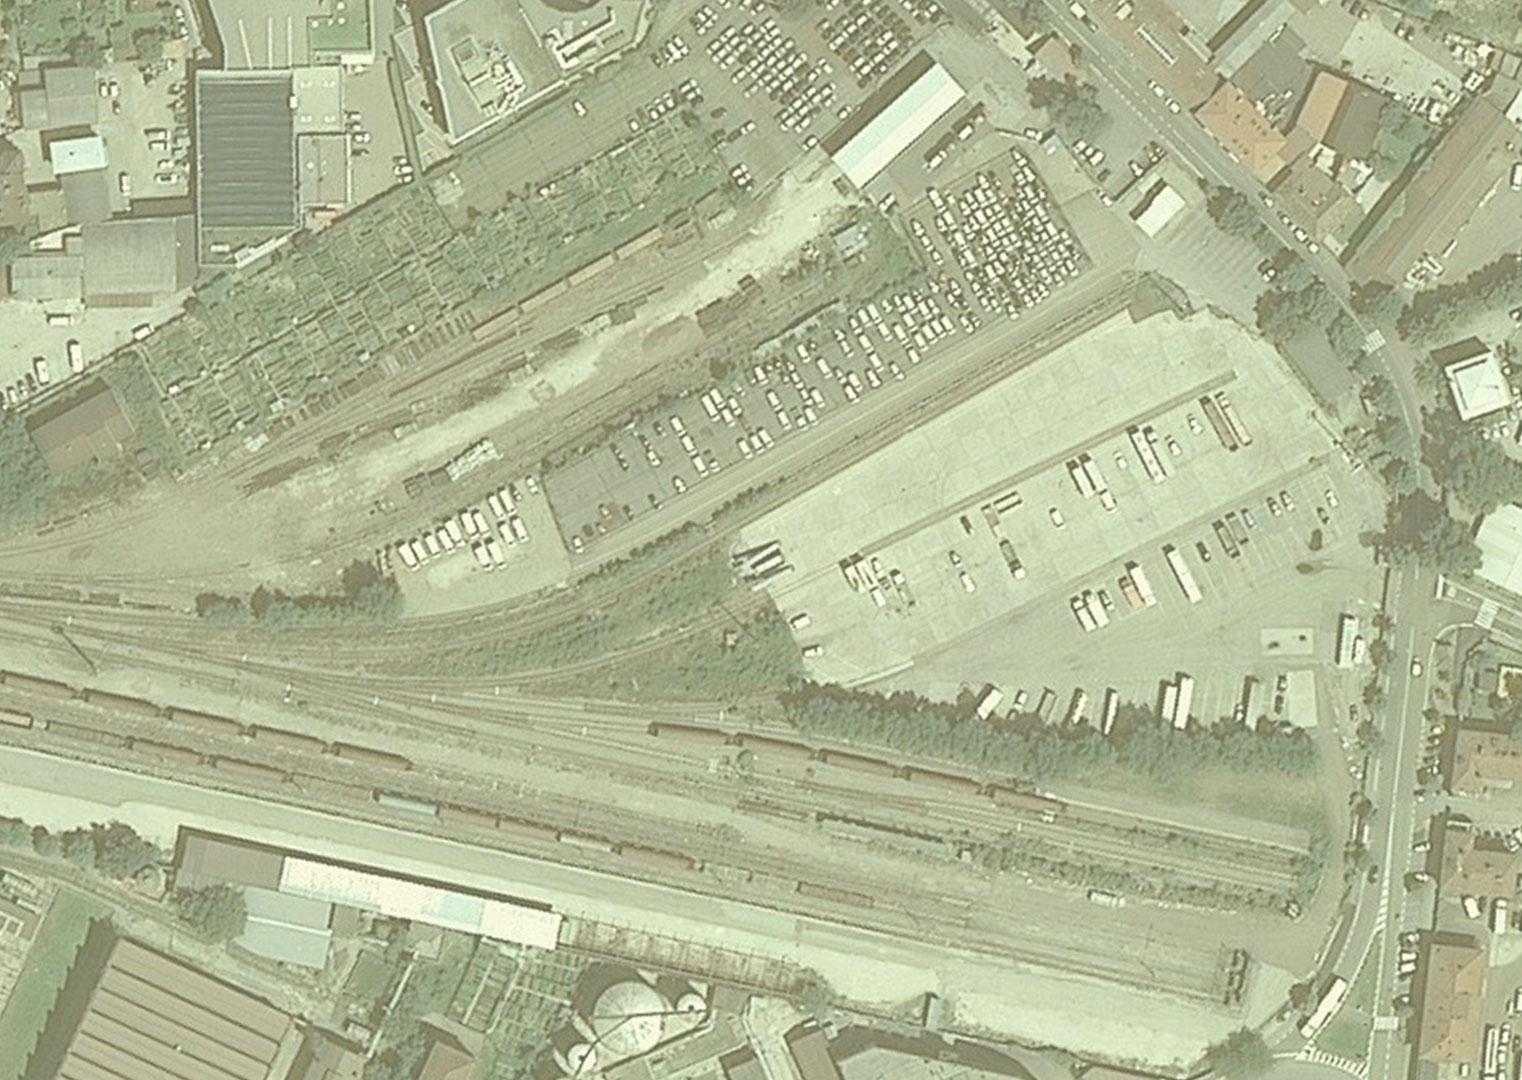 satelite image of the area 2011 http://geokatalog.buergernetz.bz.it/geokatalog/